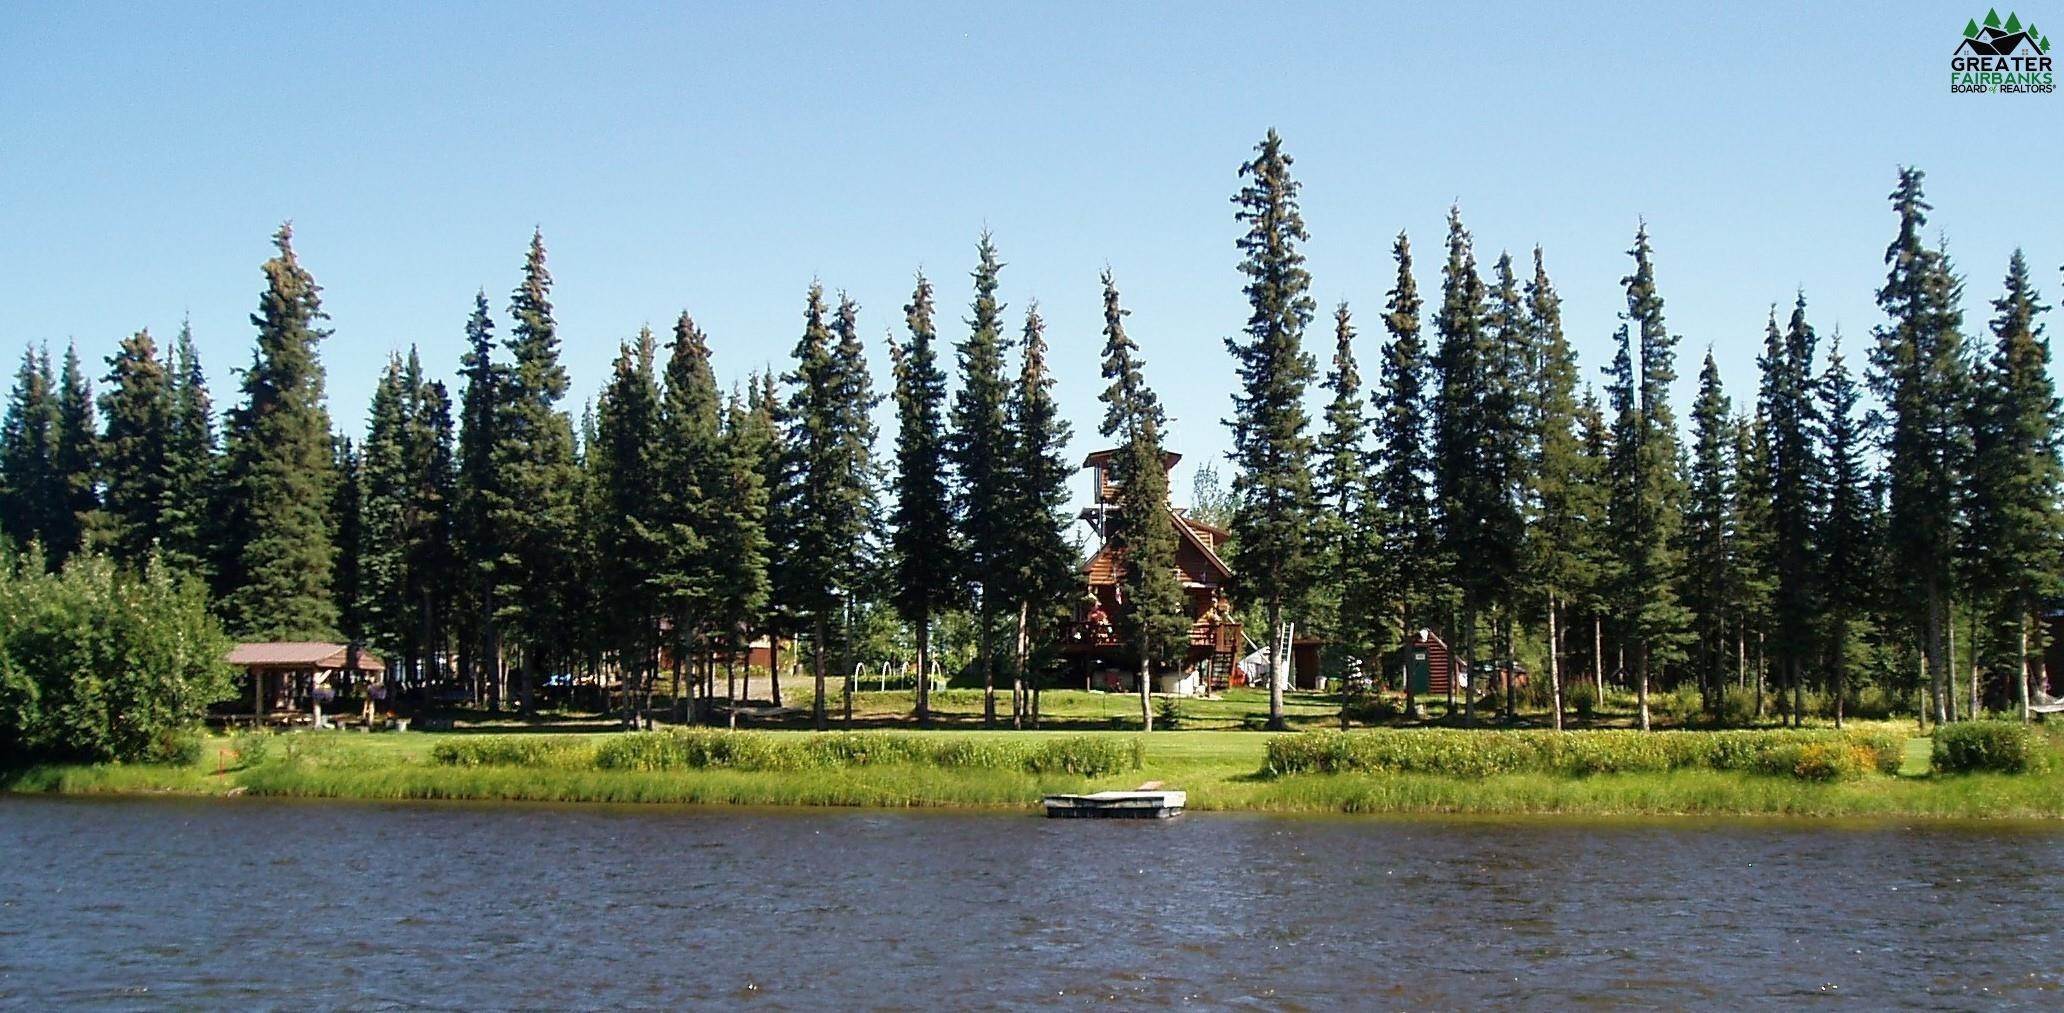 Recreational Property for Sale at Mile 147.25 RICHARDSON HIGHWAY Glennallen, Alaska 99588 United States